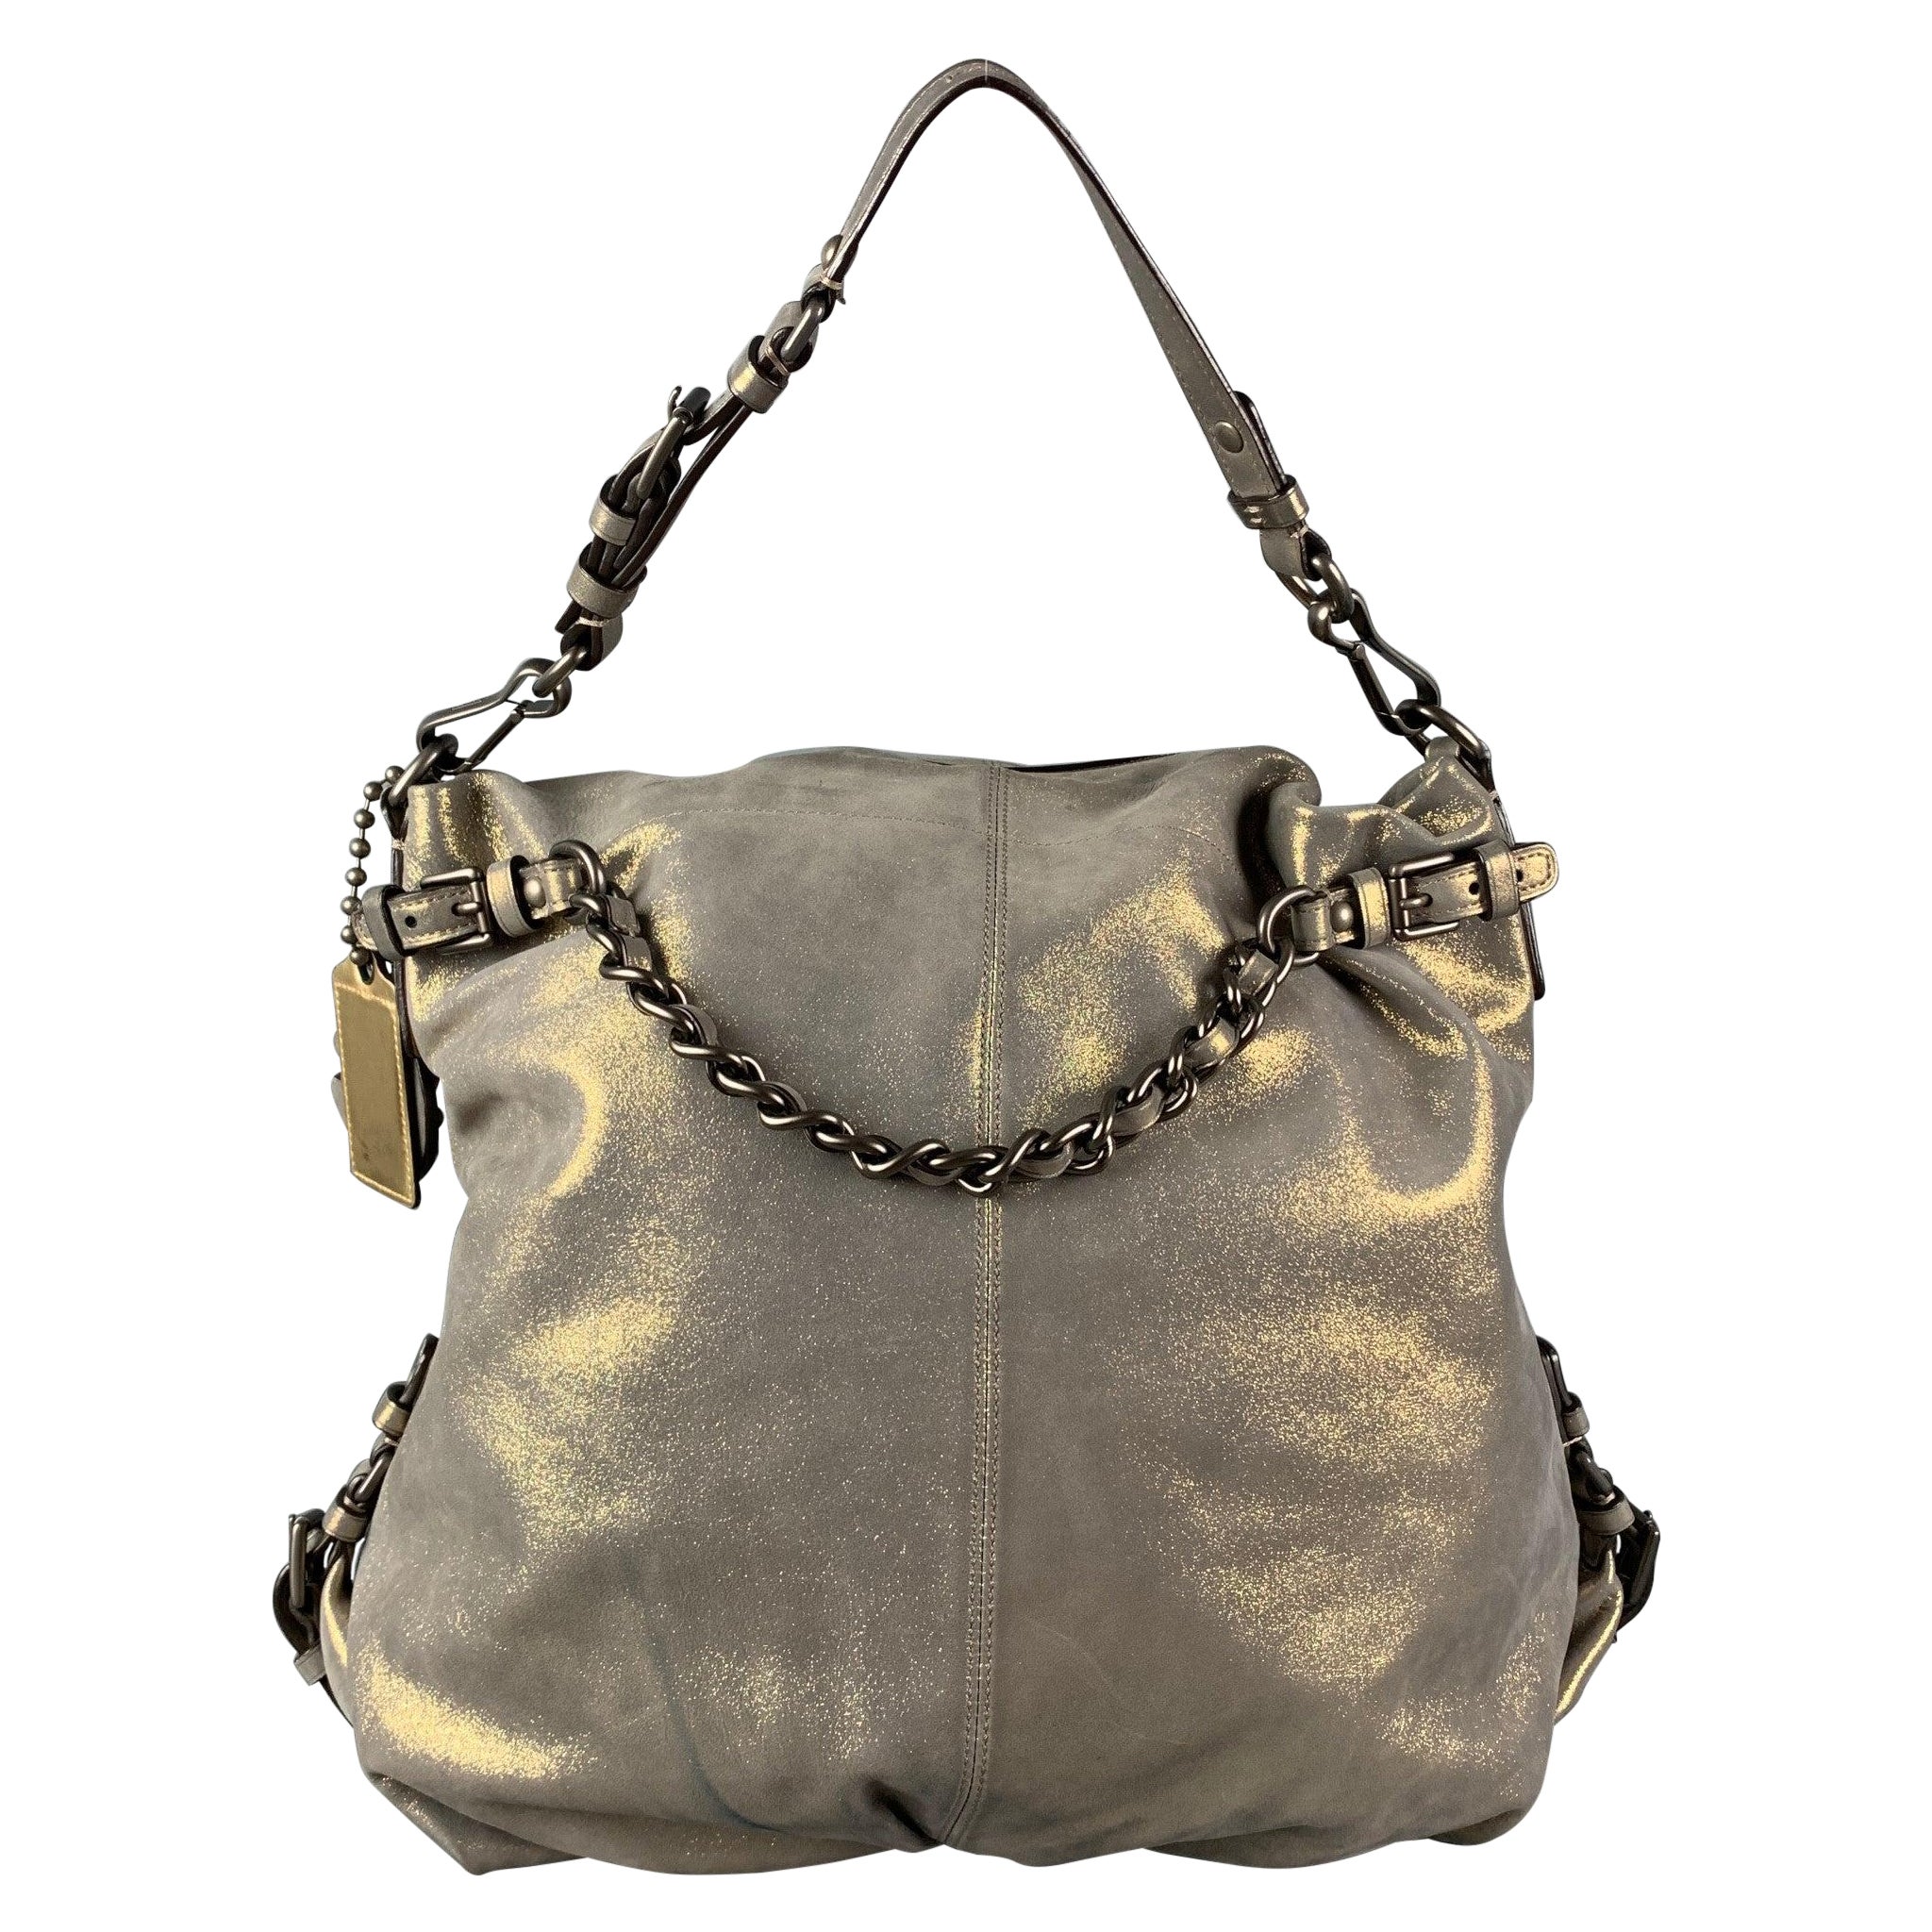 COACH Gray Metallic Leather Shoulder Bag Handbag For Sale